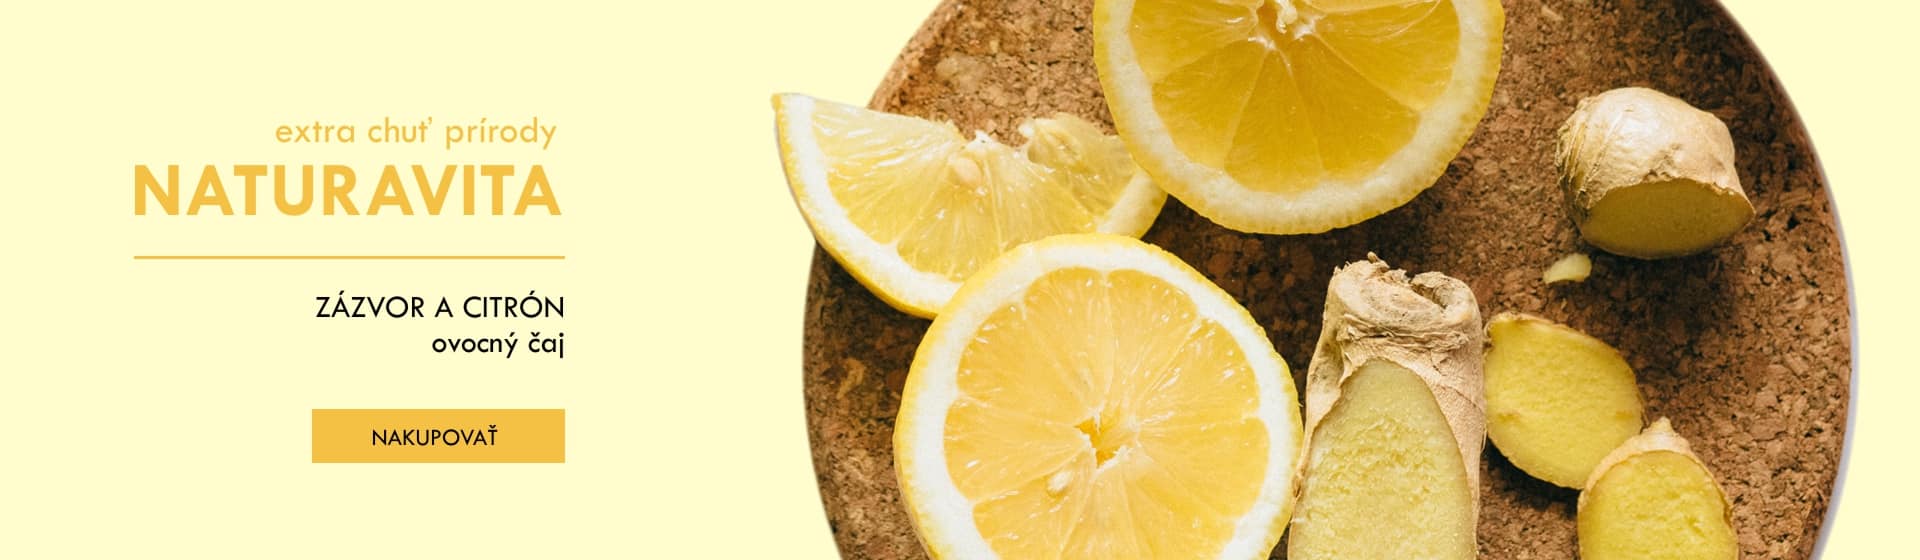 Caj Naturavita zazvor a citron